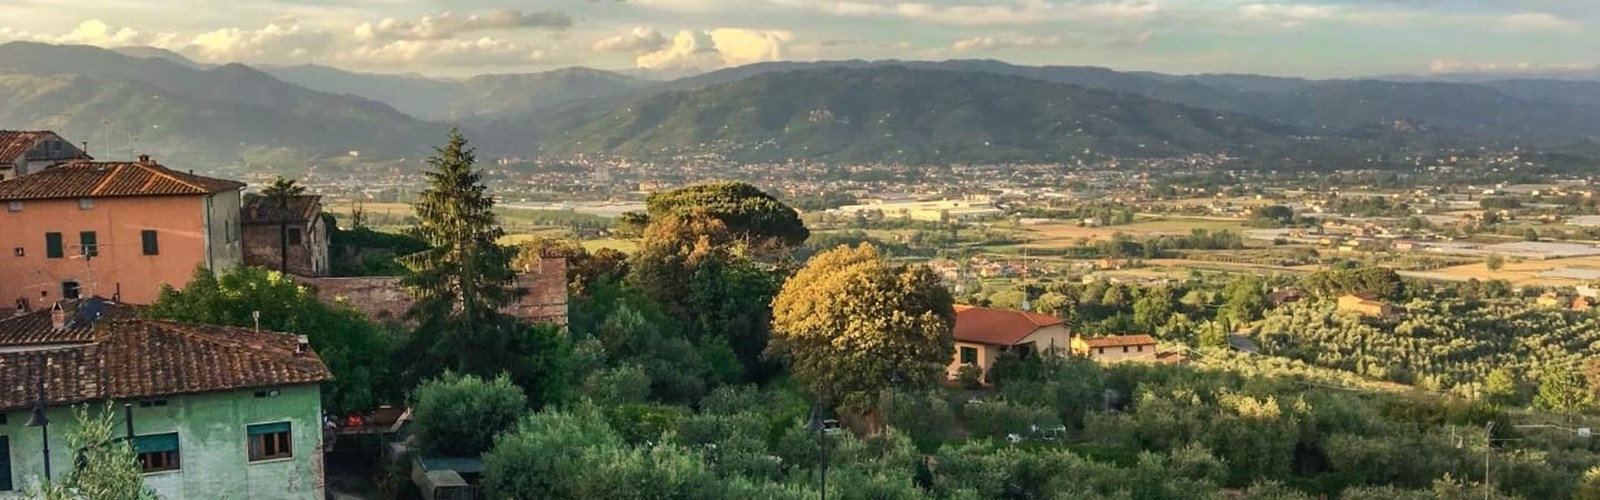 Montecarlo i Toscana i Italien